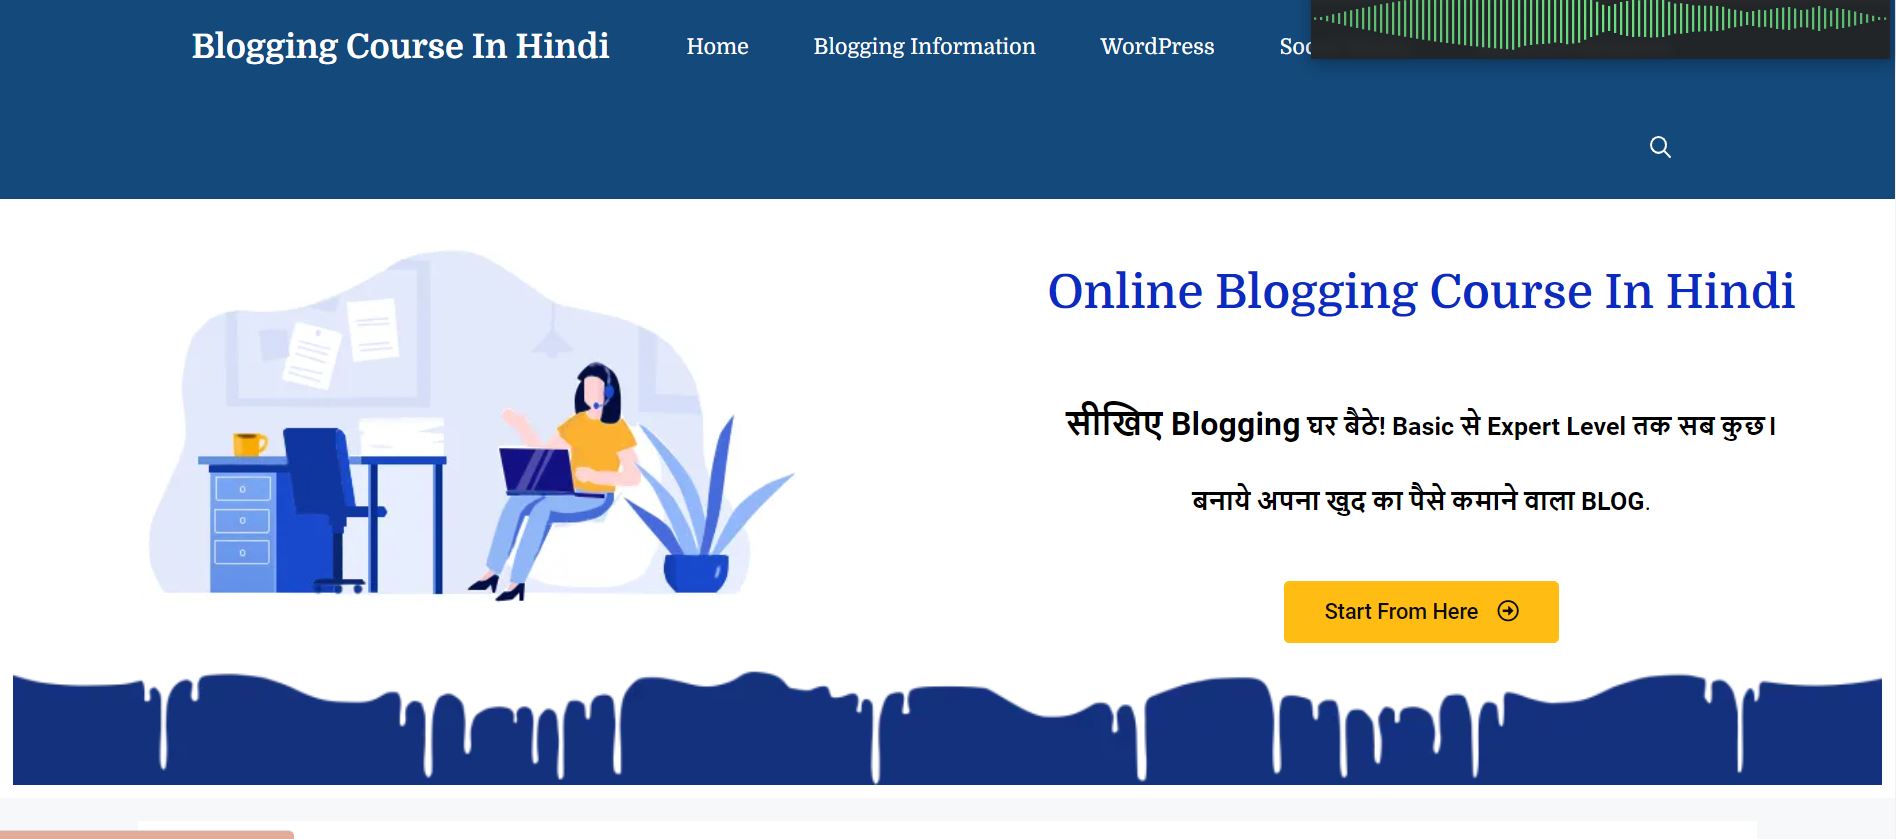 Blogging Course in Hindi